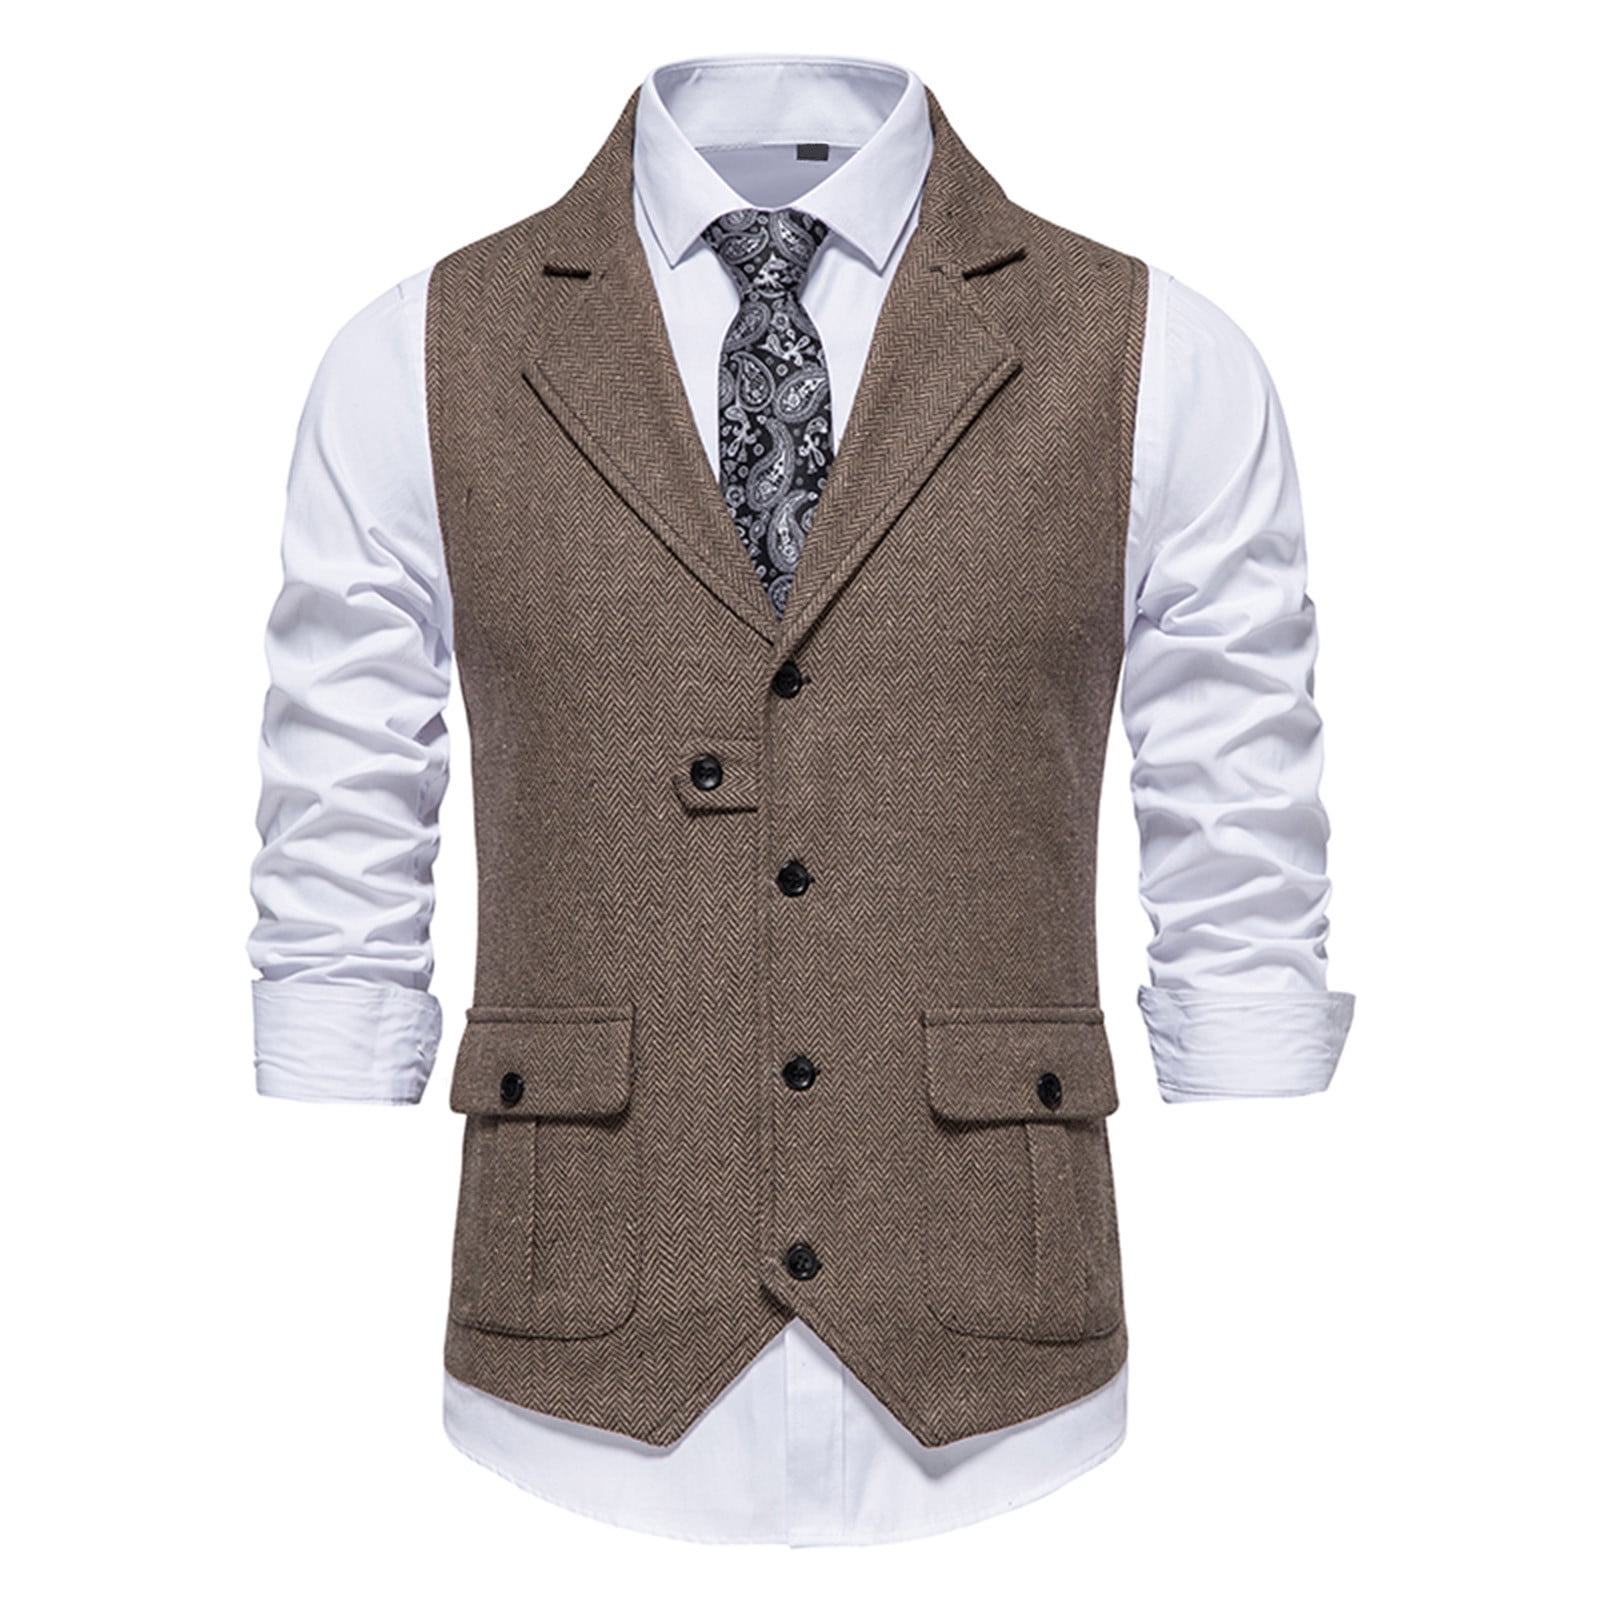 DPTALR Men's Herringbone Tweed Suit Vest Vintage Lapel Vest